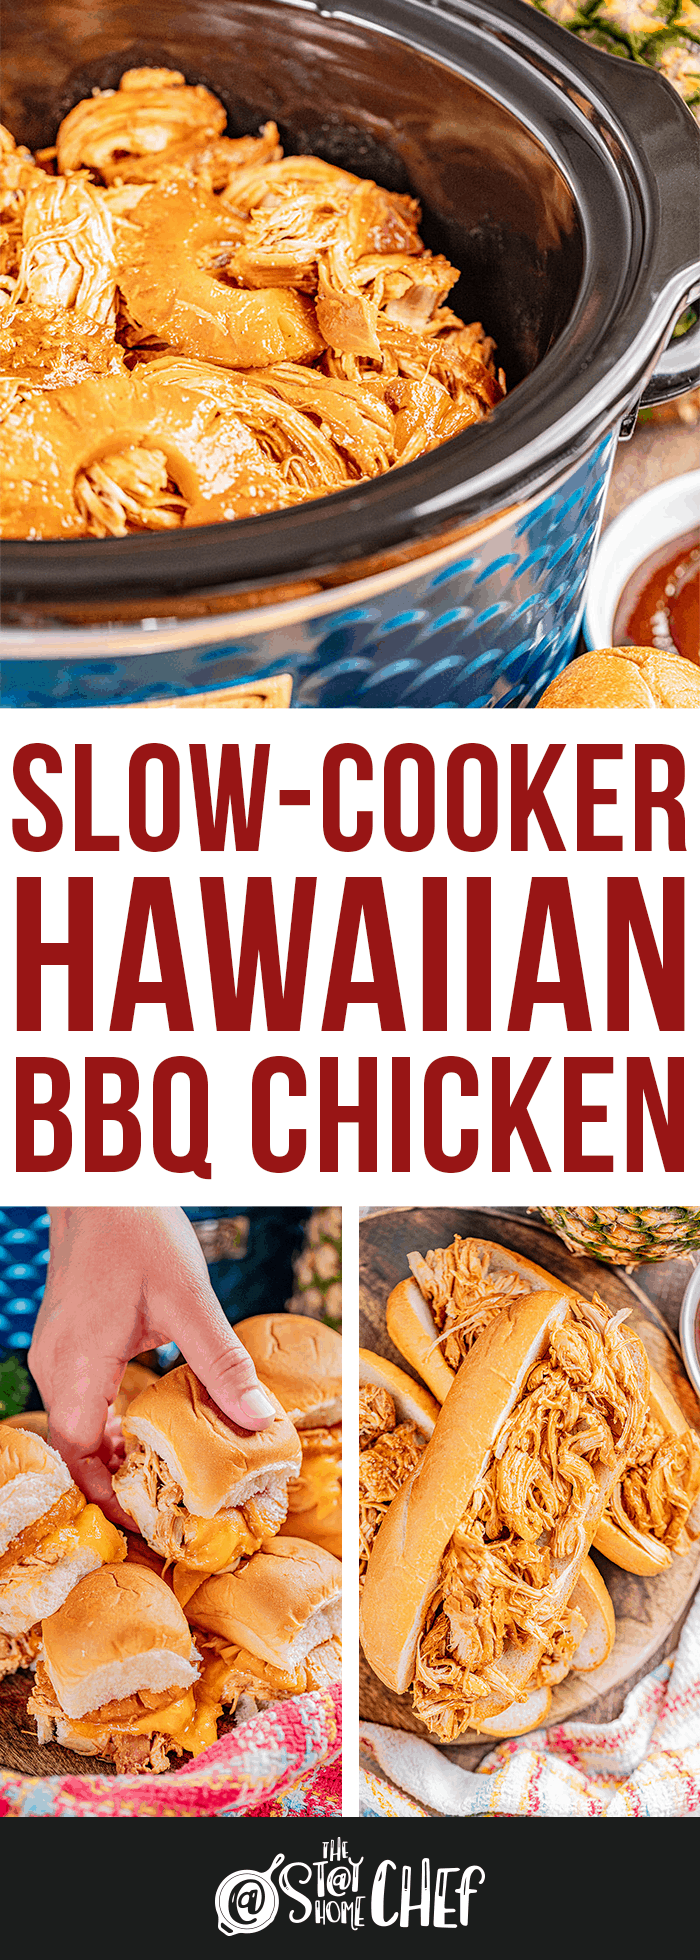 Slow Cooker Hawaiian Barbecue Chicken